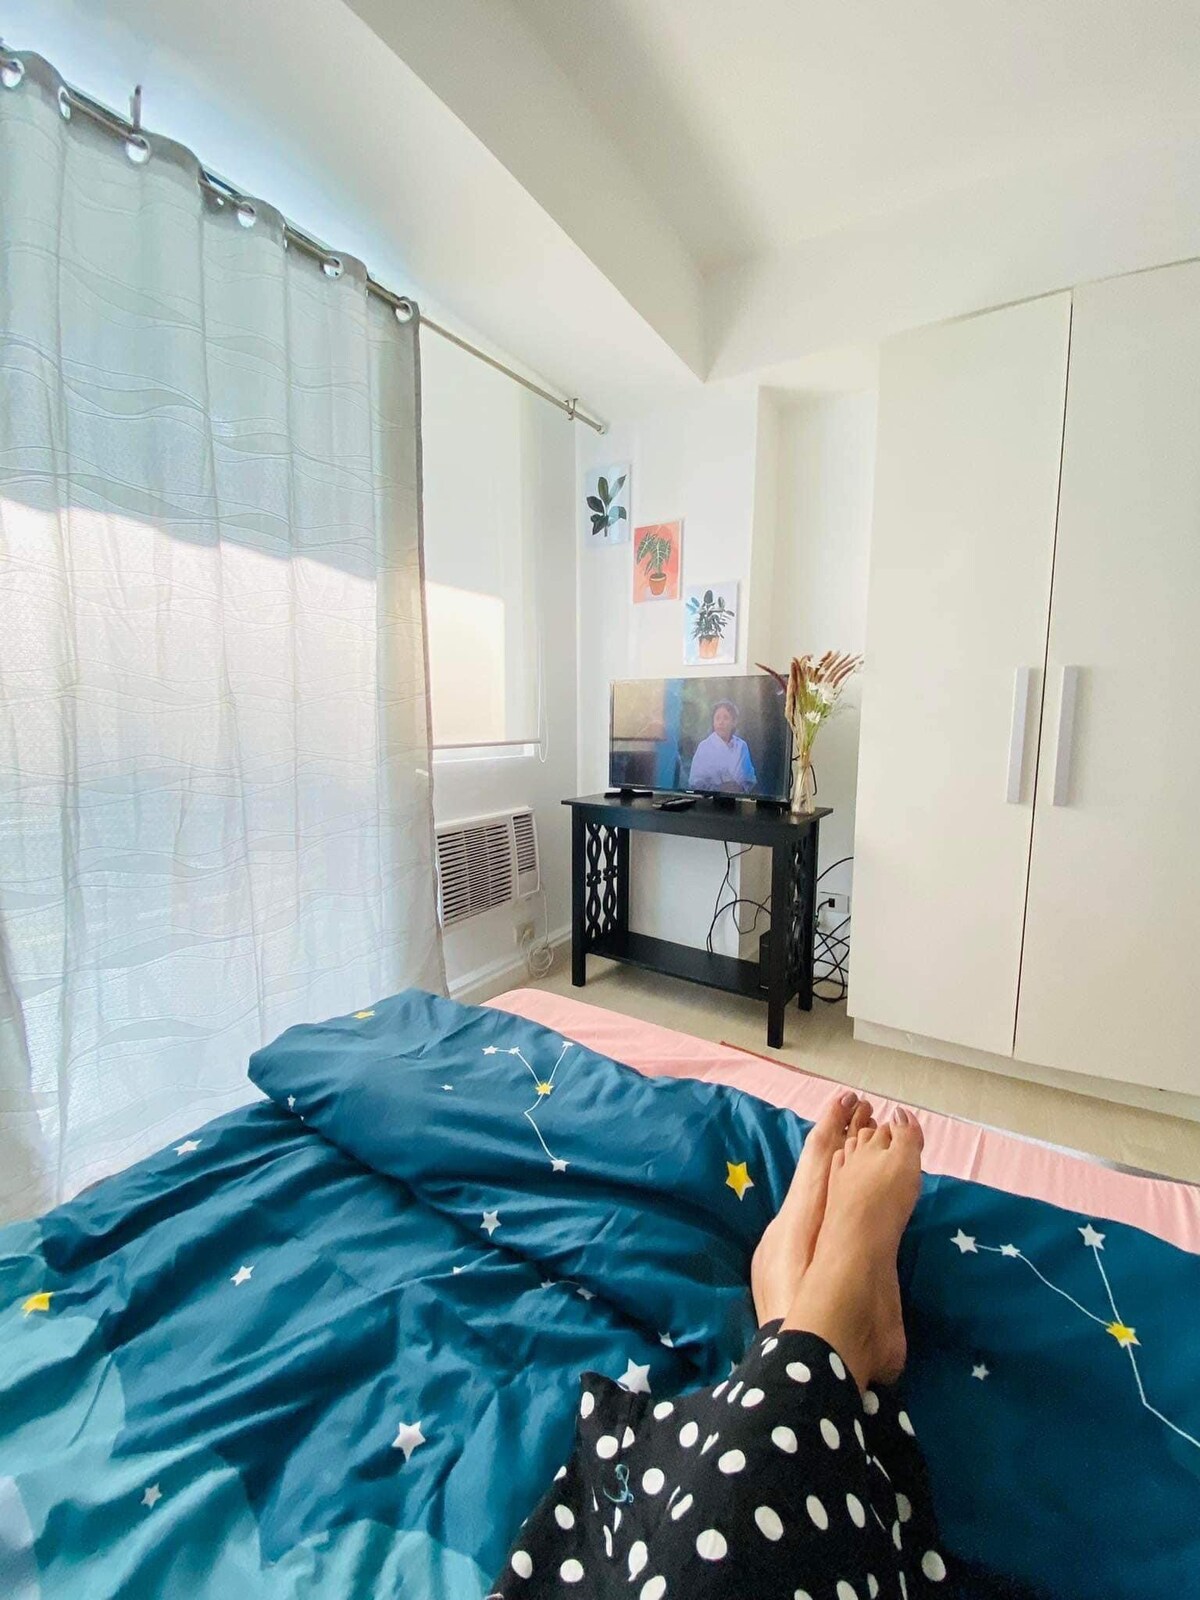 Azure paris hilton 1 bedroom amenities view